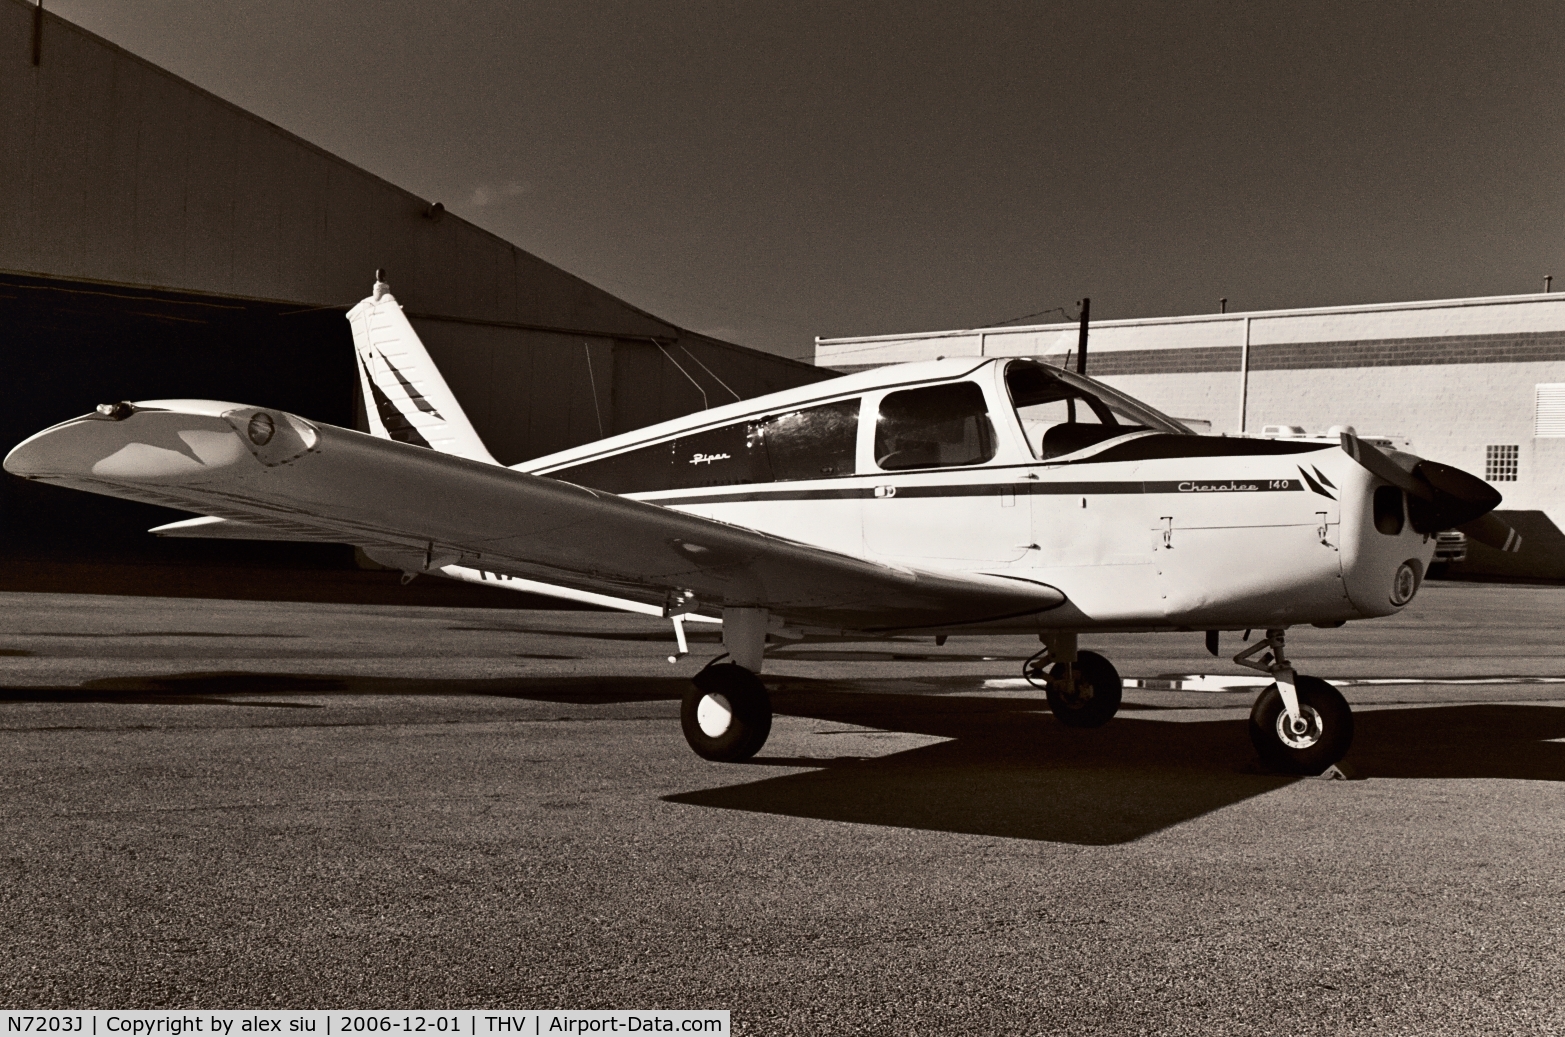 N7203J, 1968 Piper PA-28-140 C/N 28-24534, Wing tips w/ lights